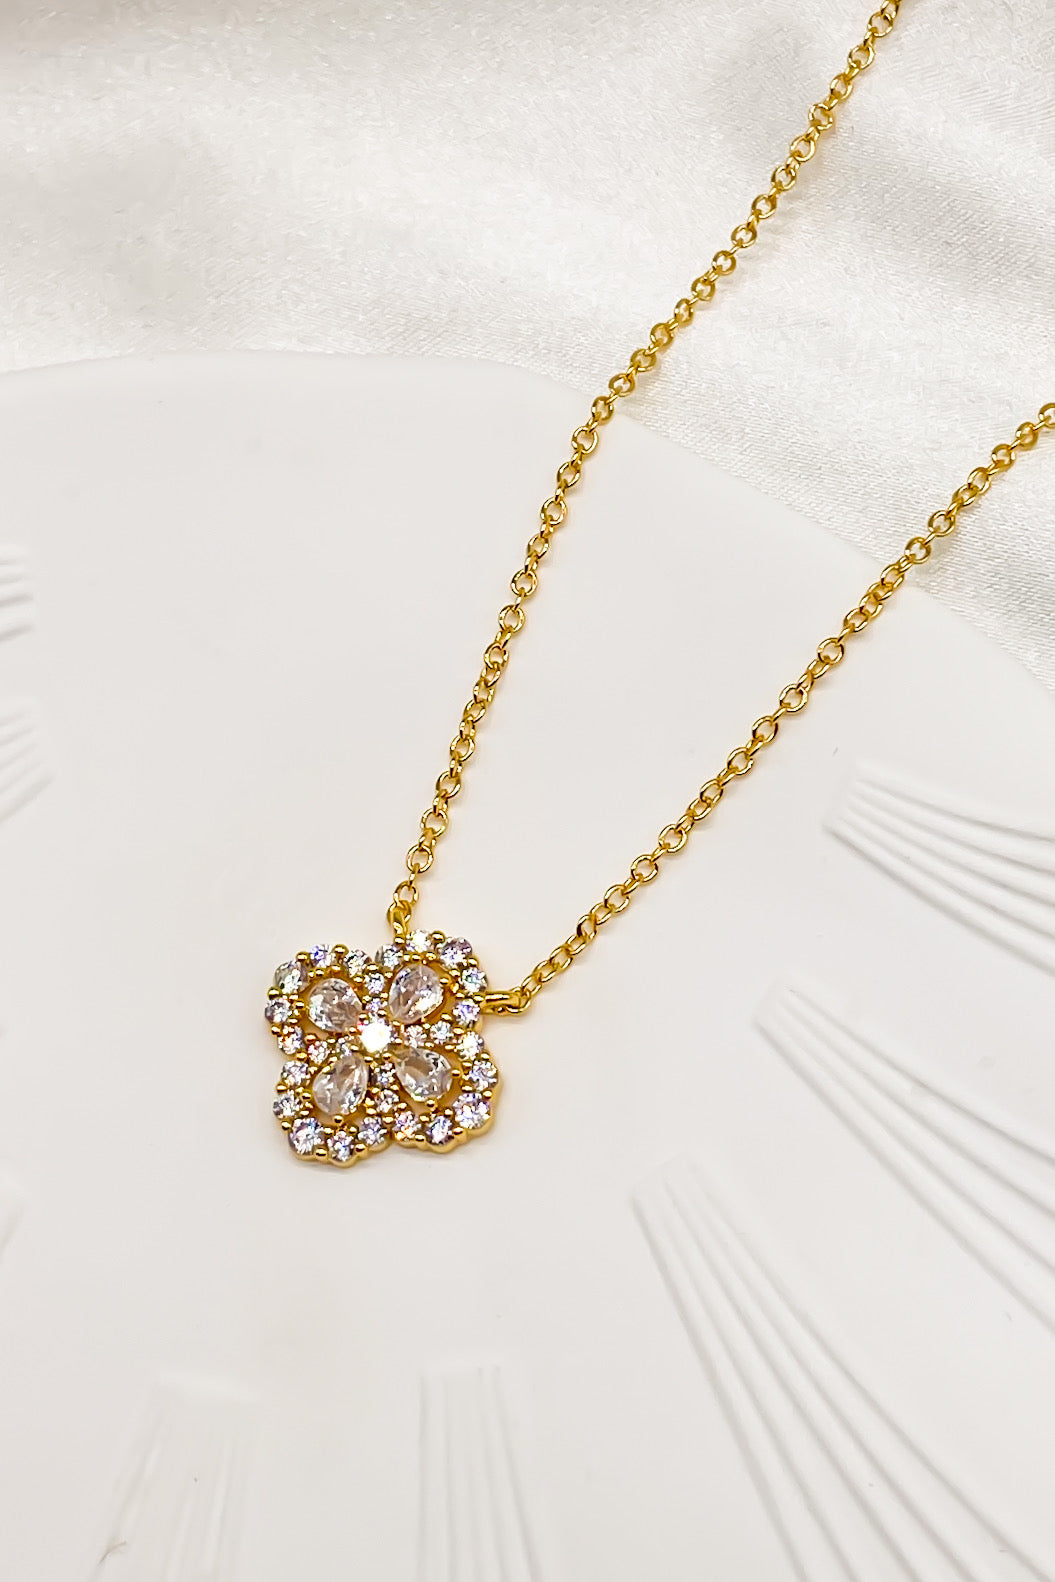 SKYE Shop Chic Modern Elegant Classy Women Jewelry French Parisian Minimalist Millie Crystal Clover Pendant Necklace 4